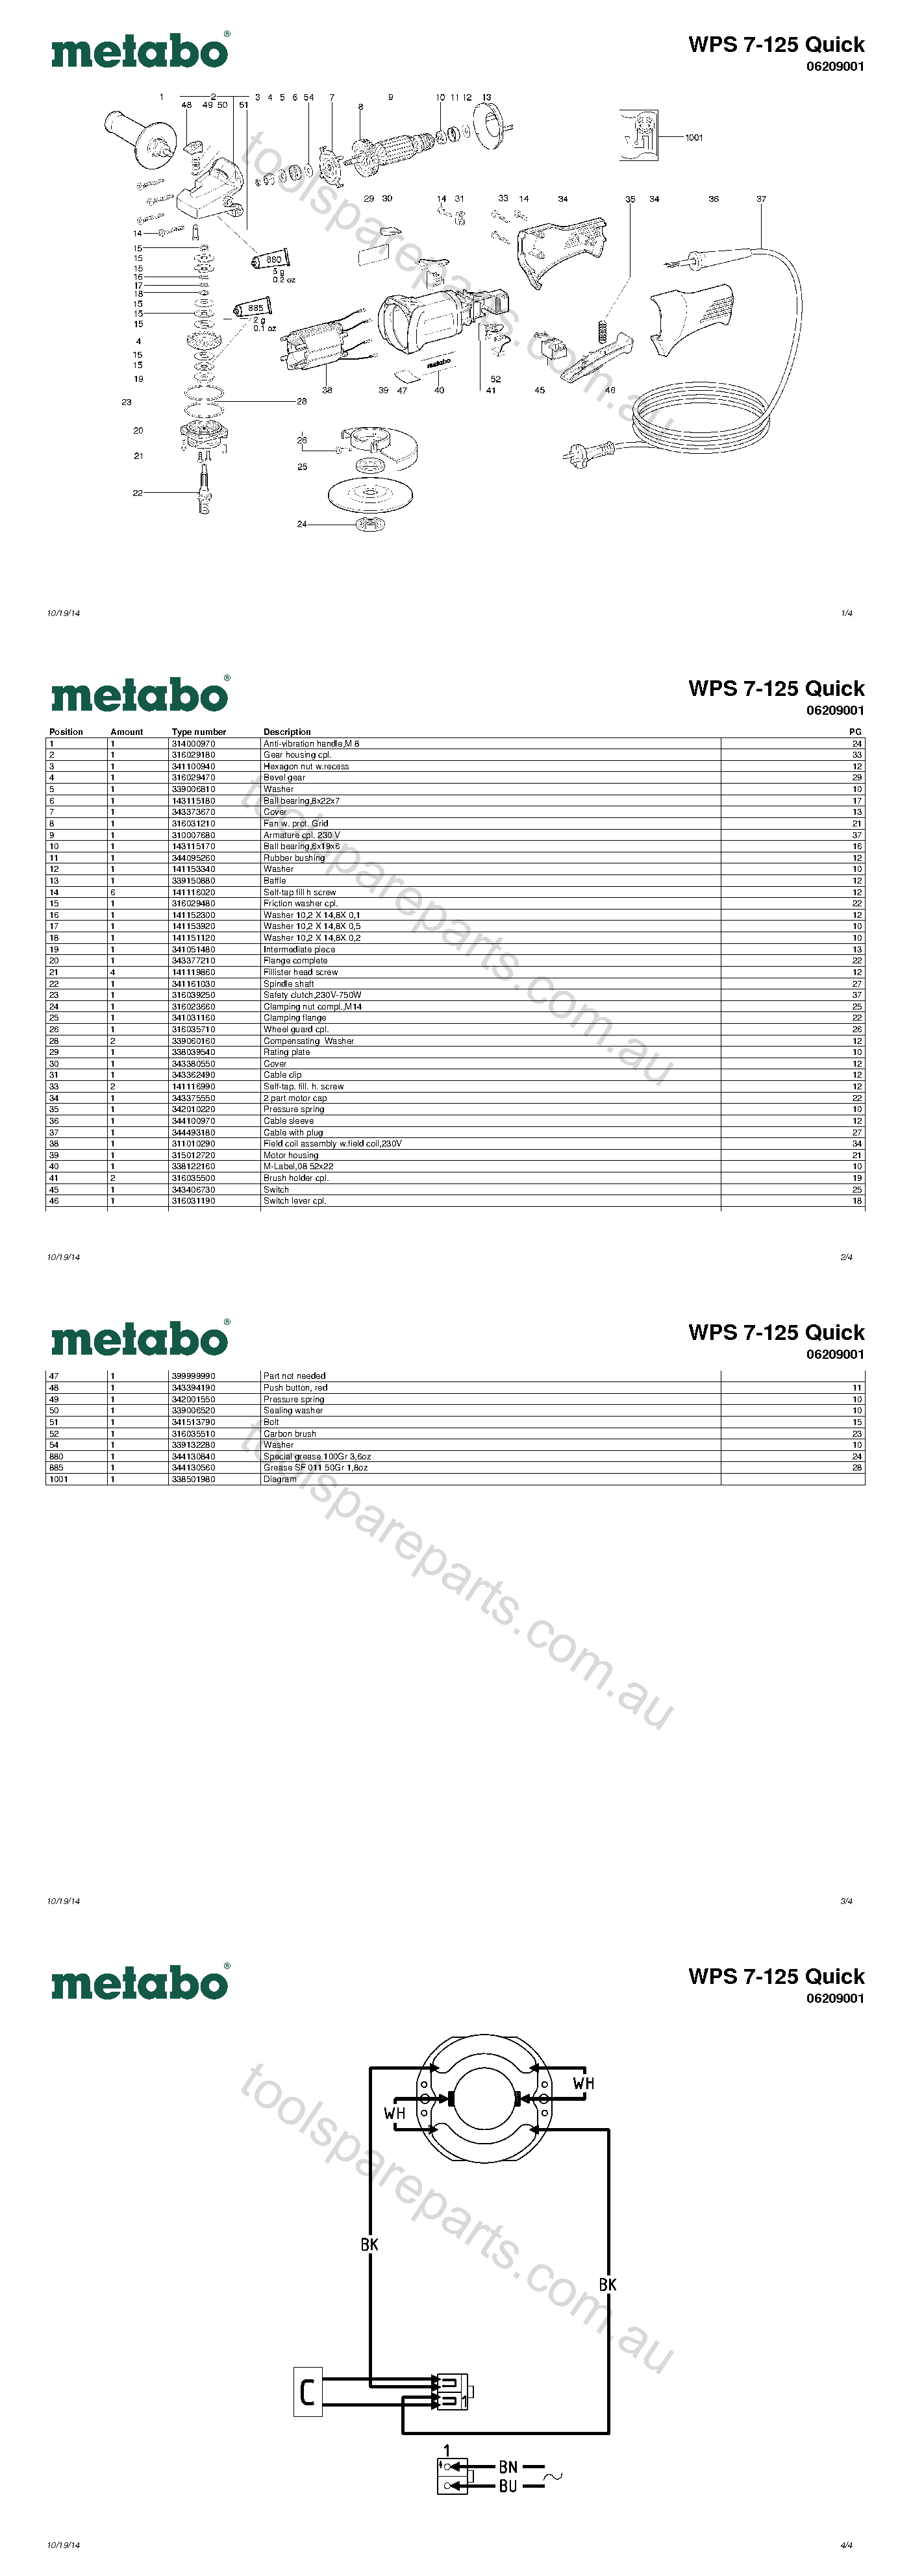 Metabo WPS 7-125 Quick 06209001  Diagram 1